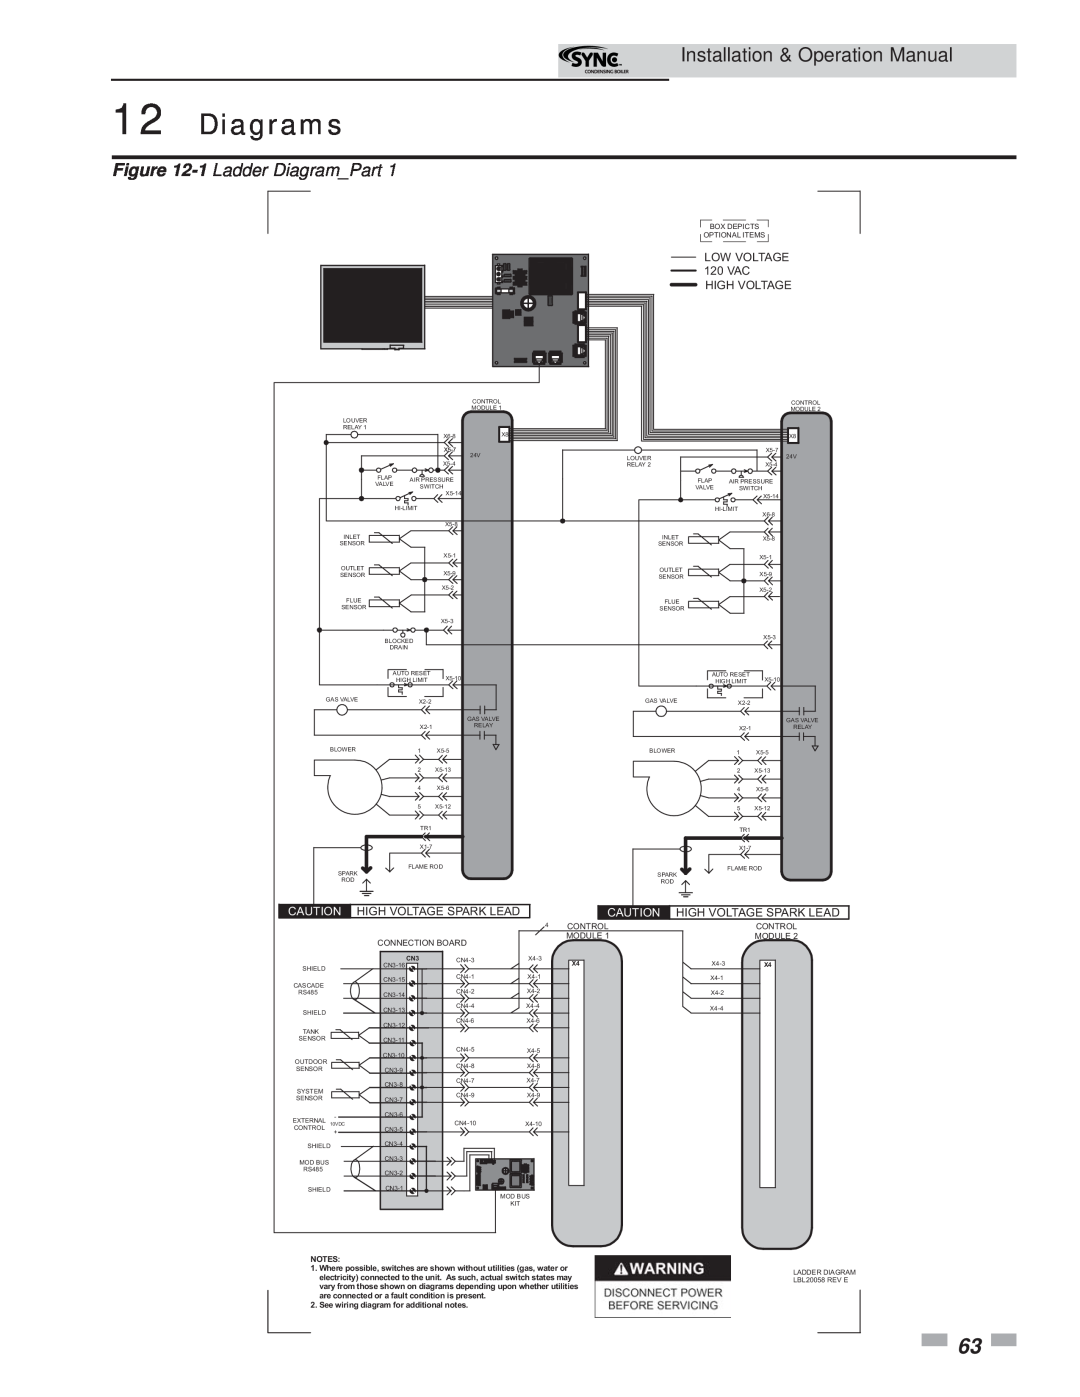 Lochinvar 5 Diagrams, 1 Ladder Diagram_Part, Installation & Operation Manual, LOW VOLTAGE 120 VAC HIGH VOLTAGE, Notes 